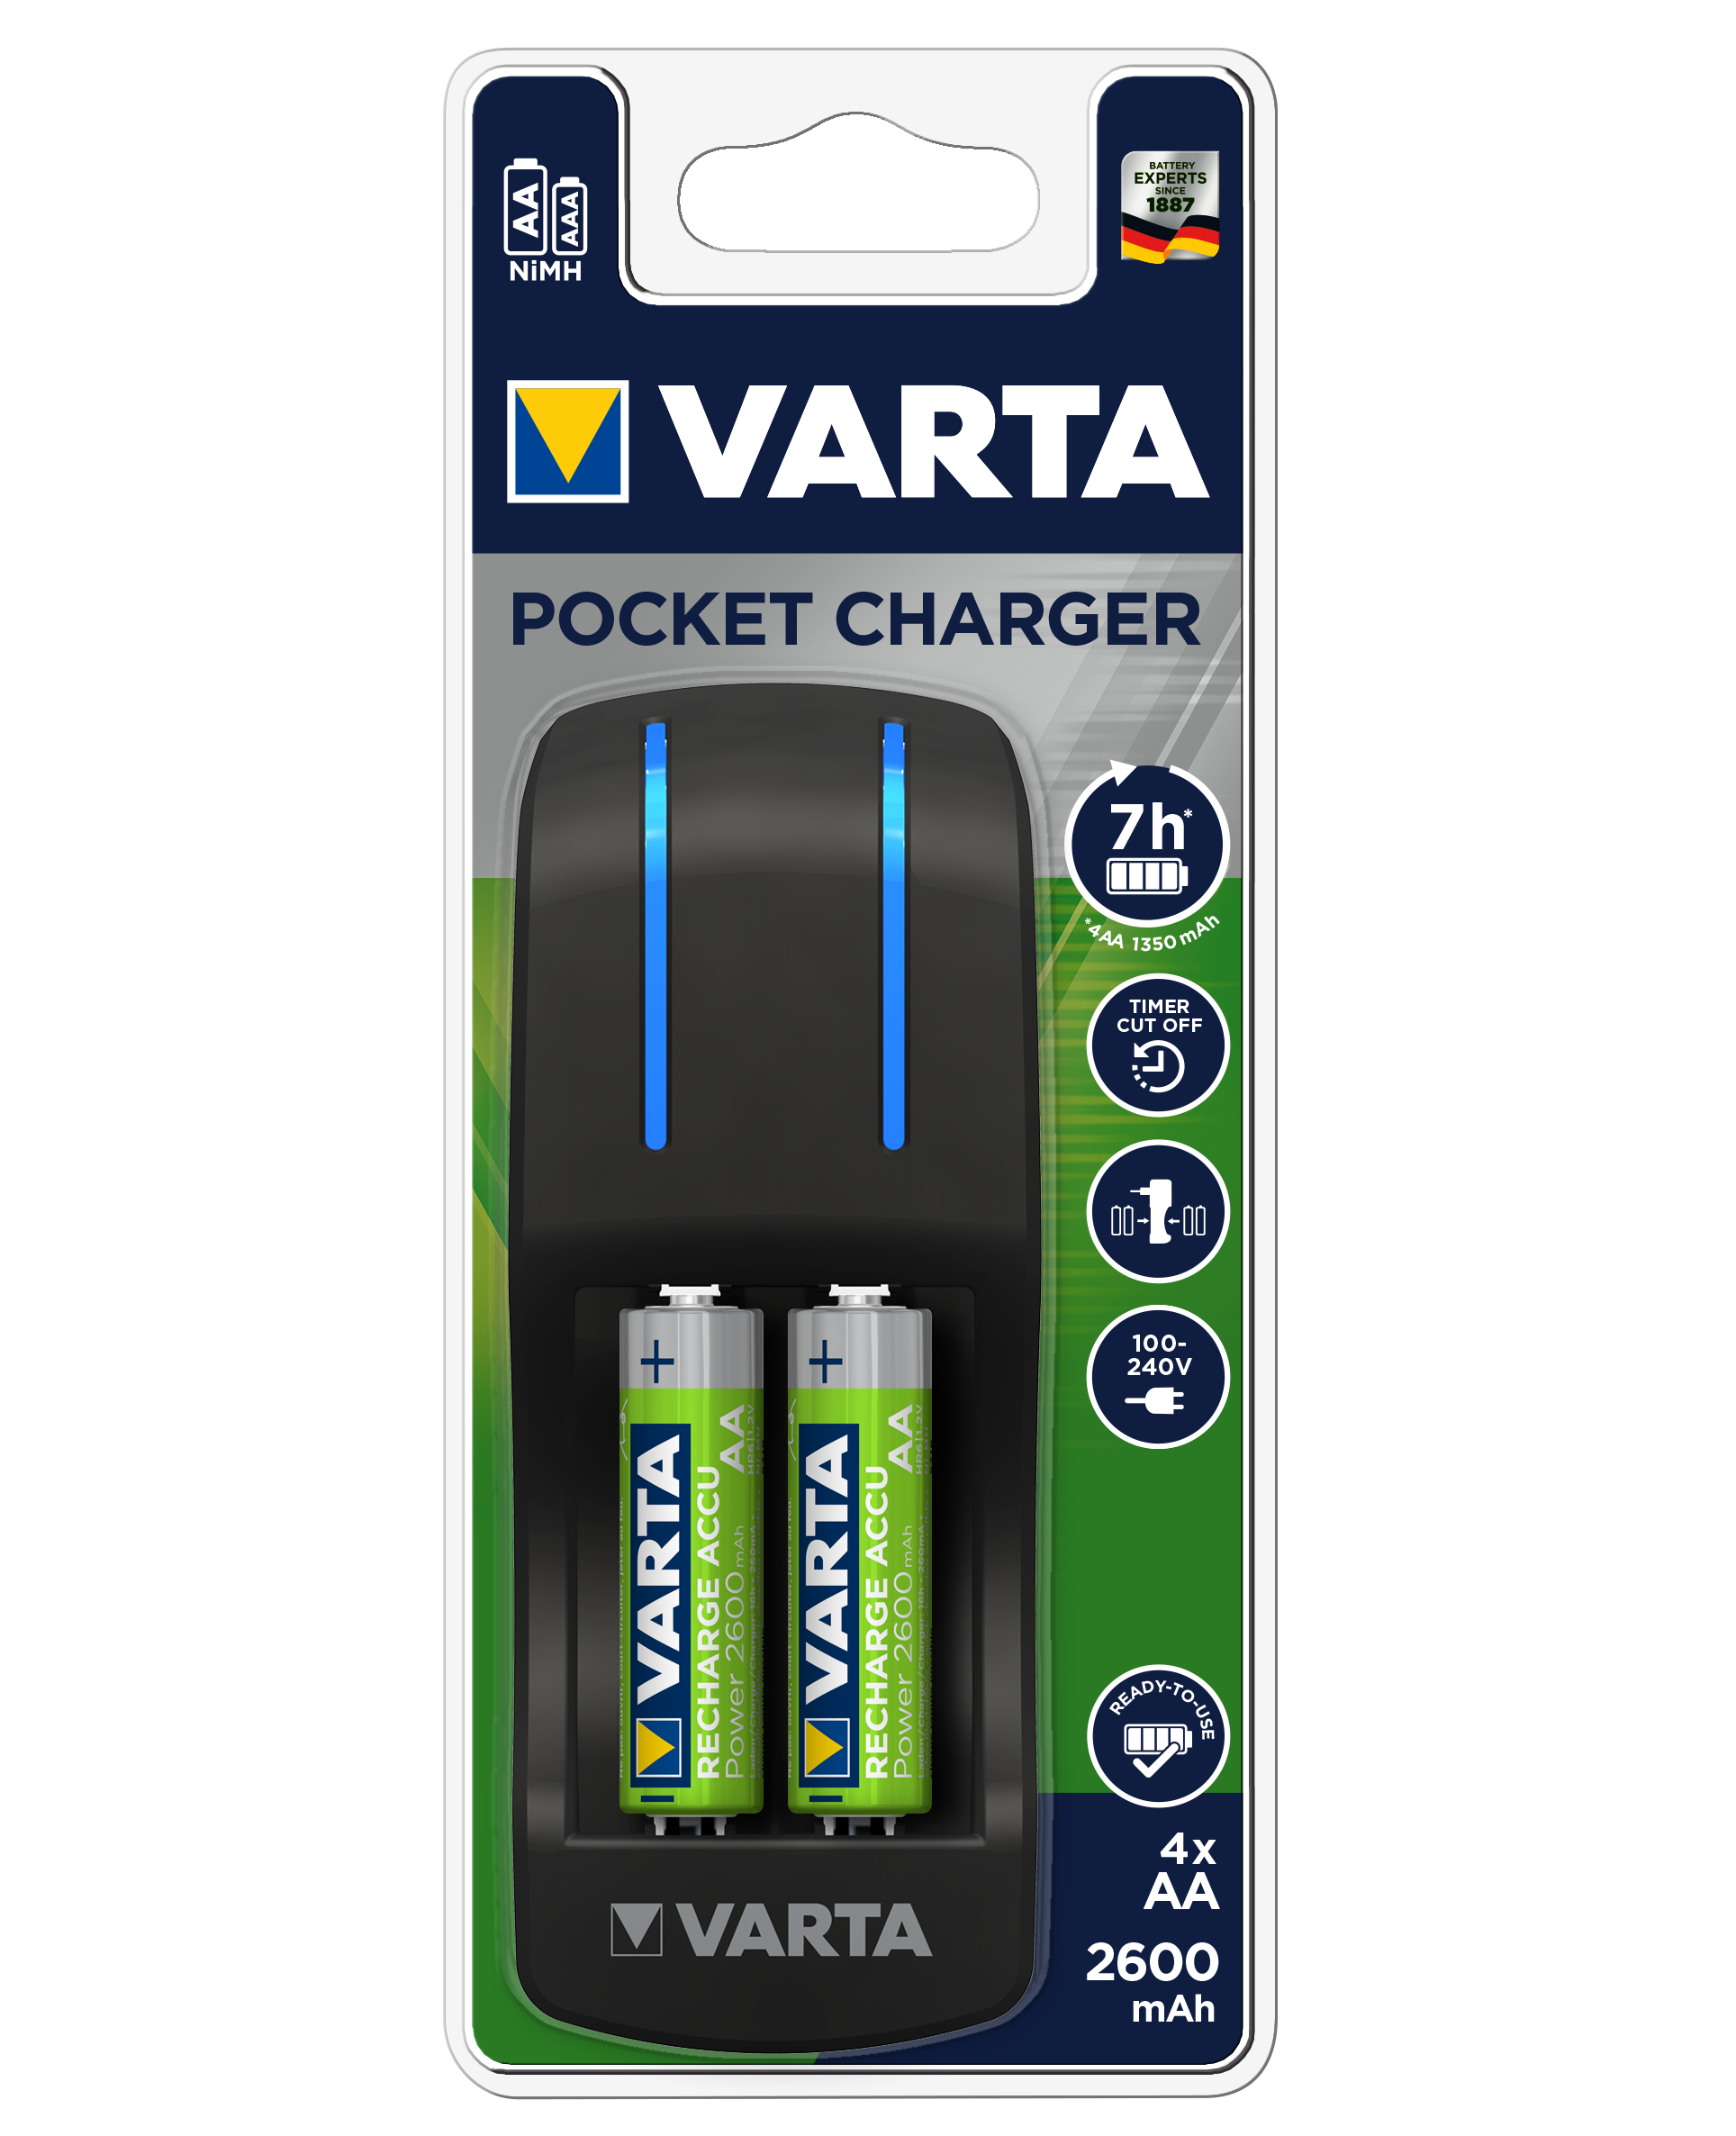 Зарядное ус-во VARTA Pocket Charger AAA/AA +4хАА 2600мАч 7h timer